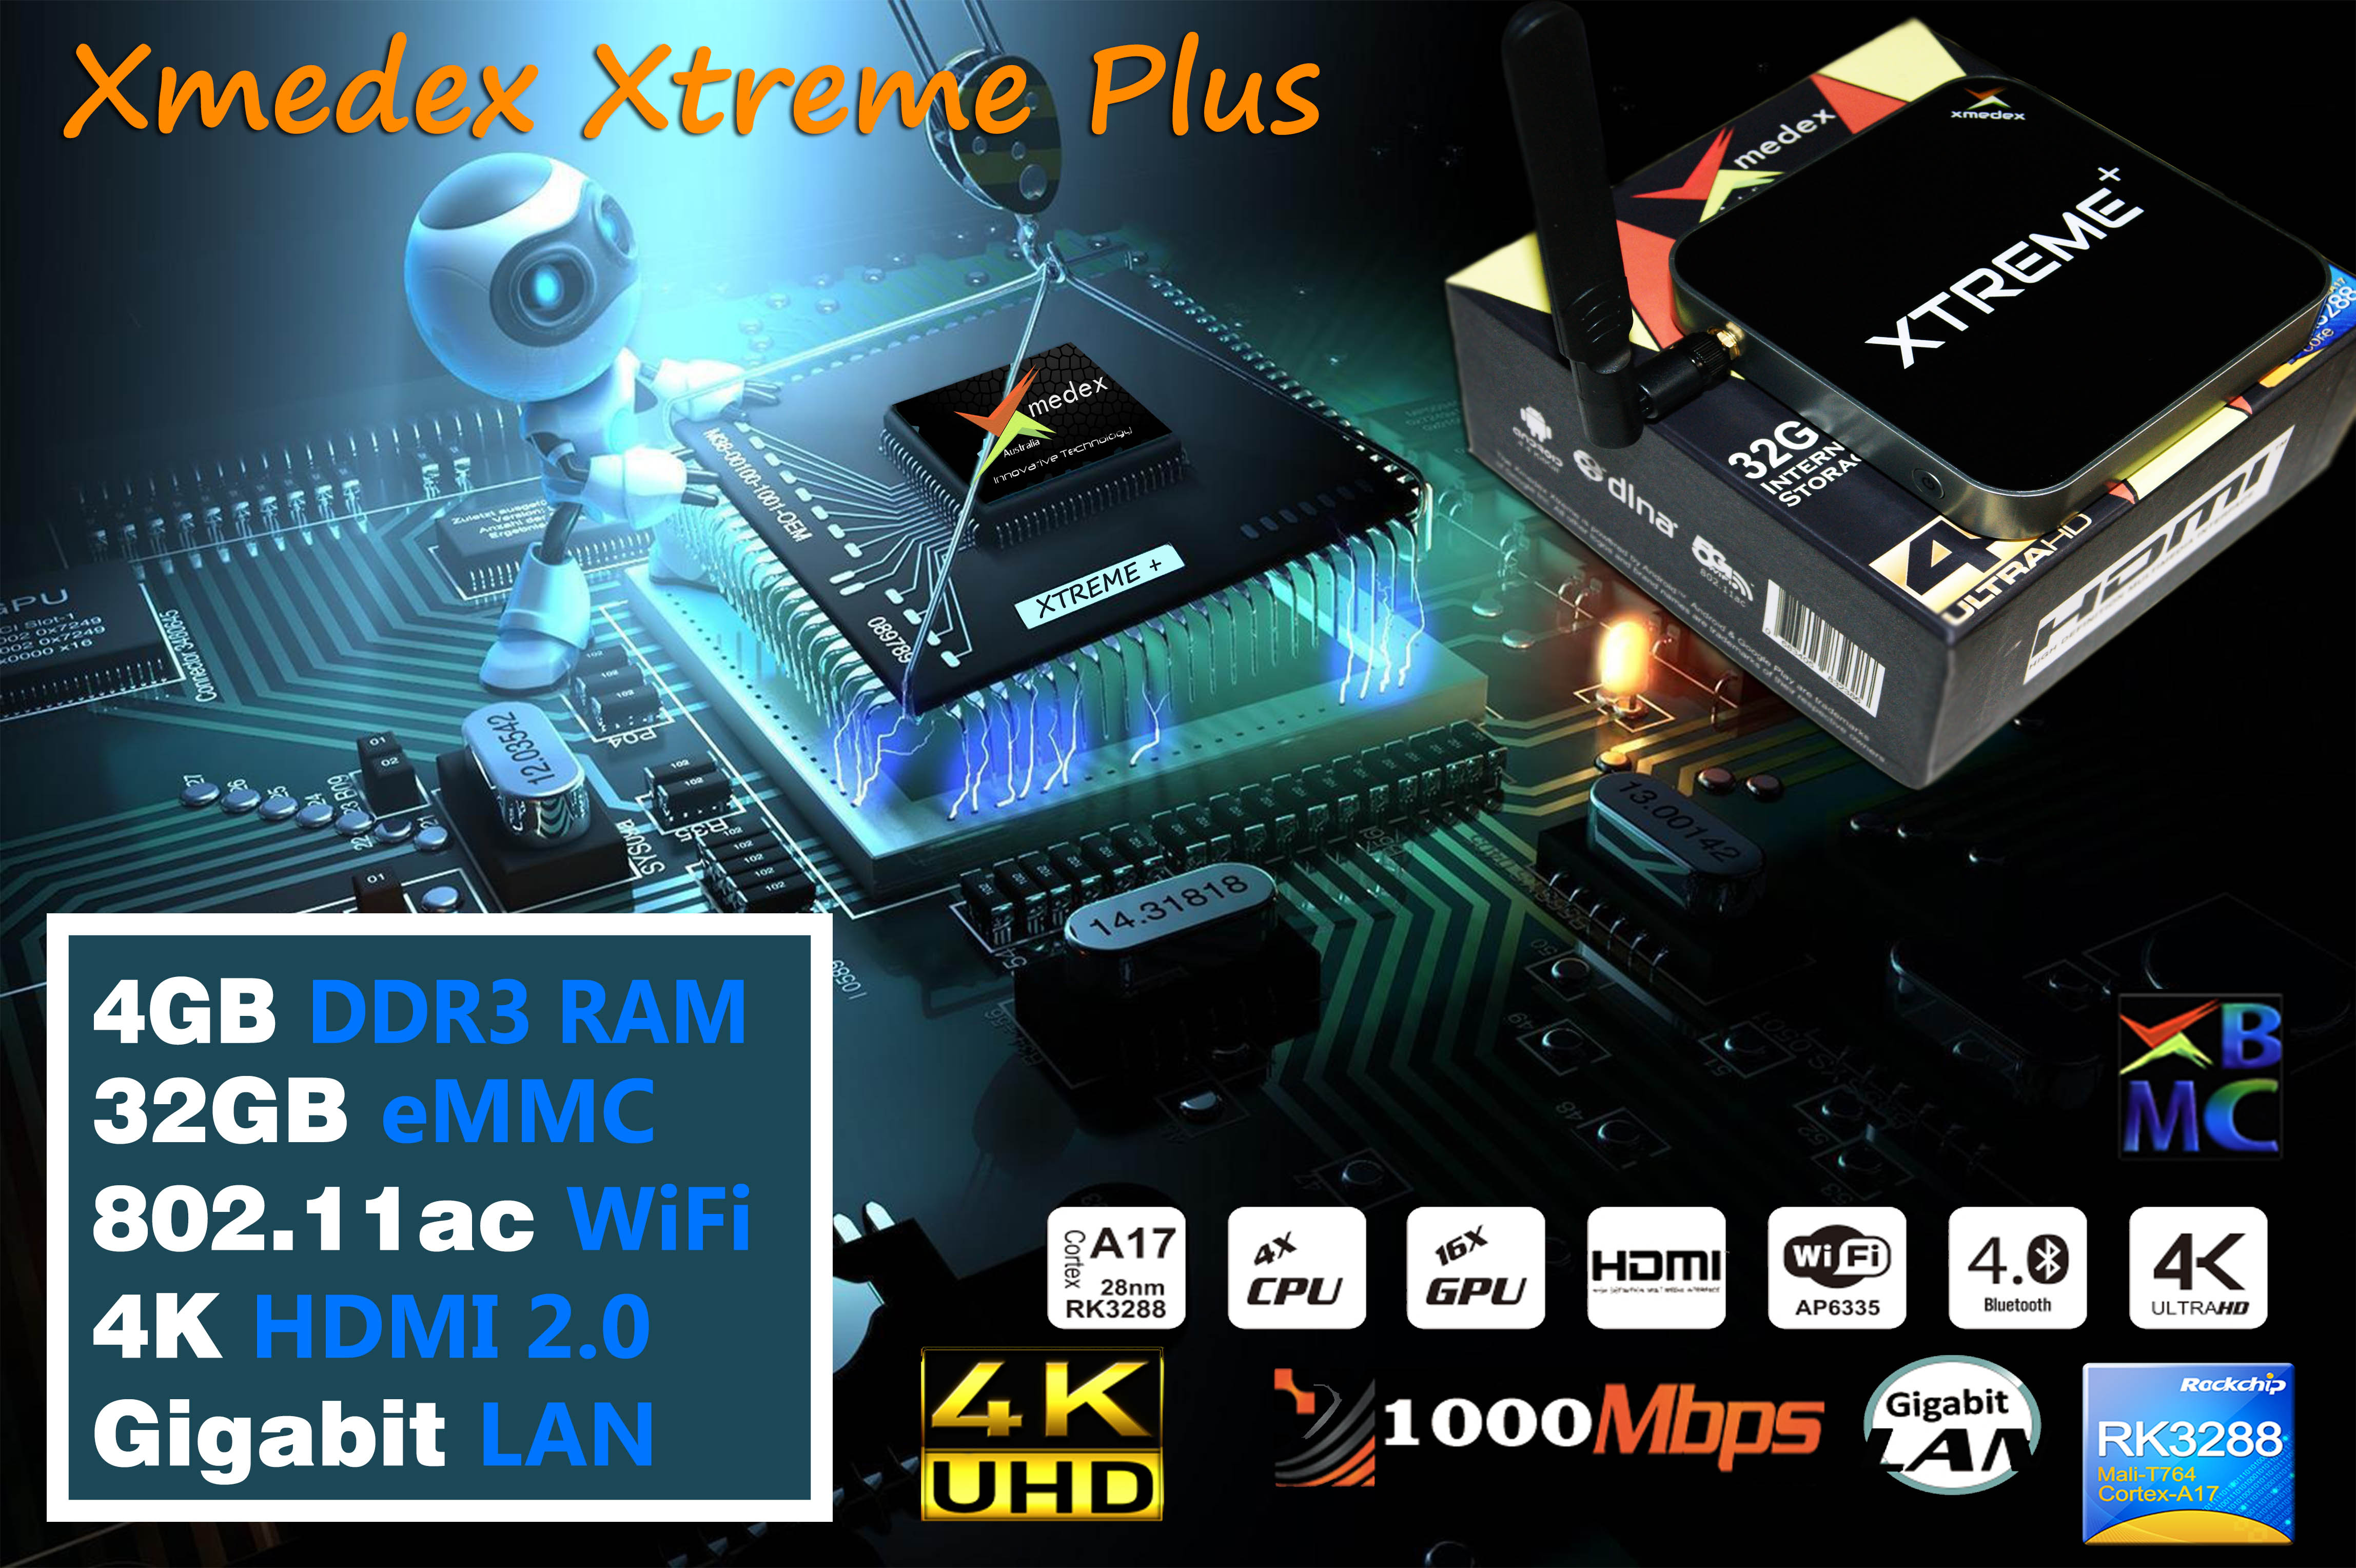 Xmedex Xtreme Plus